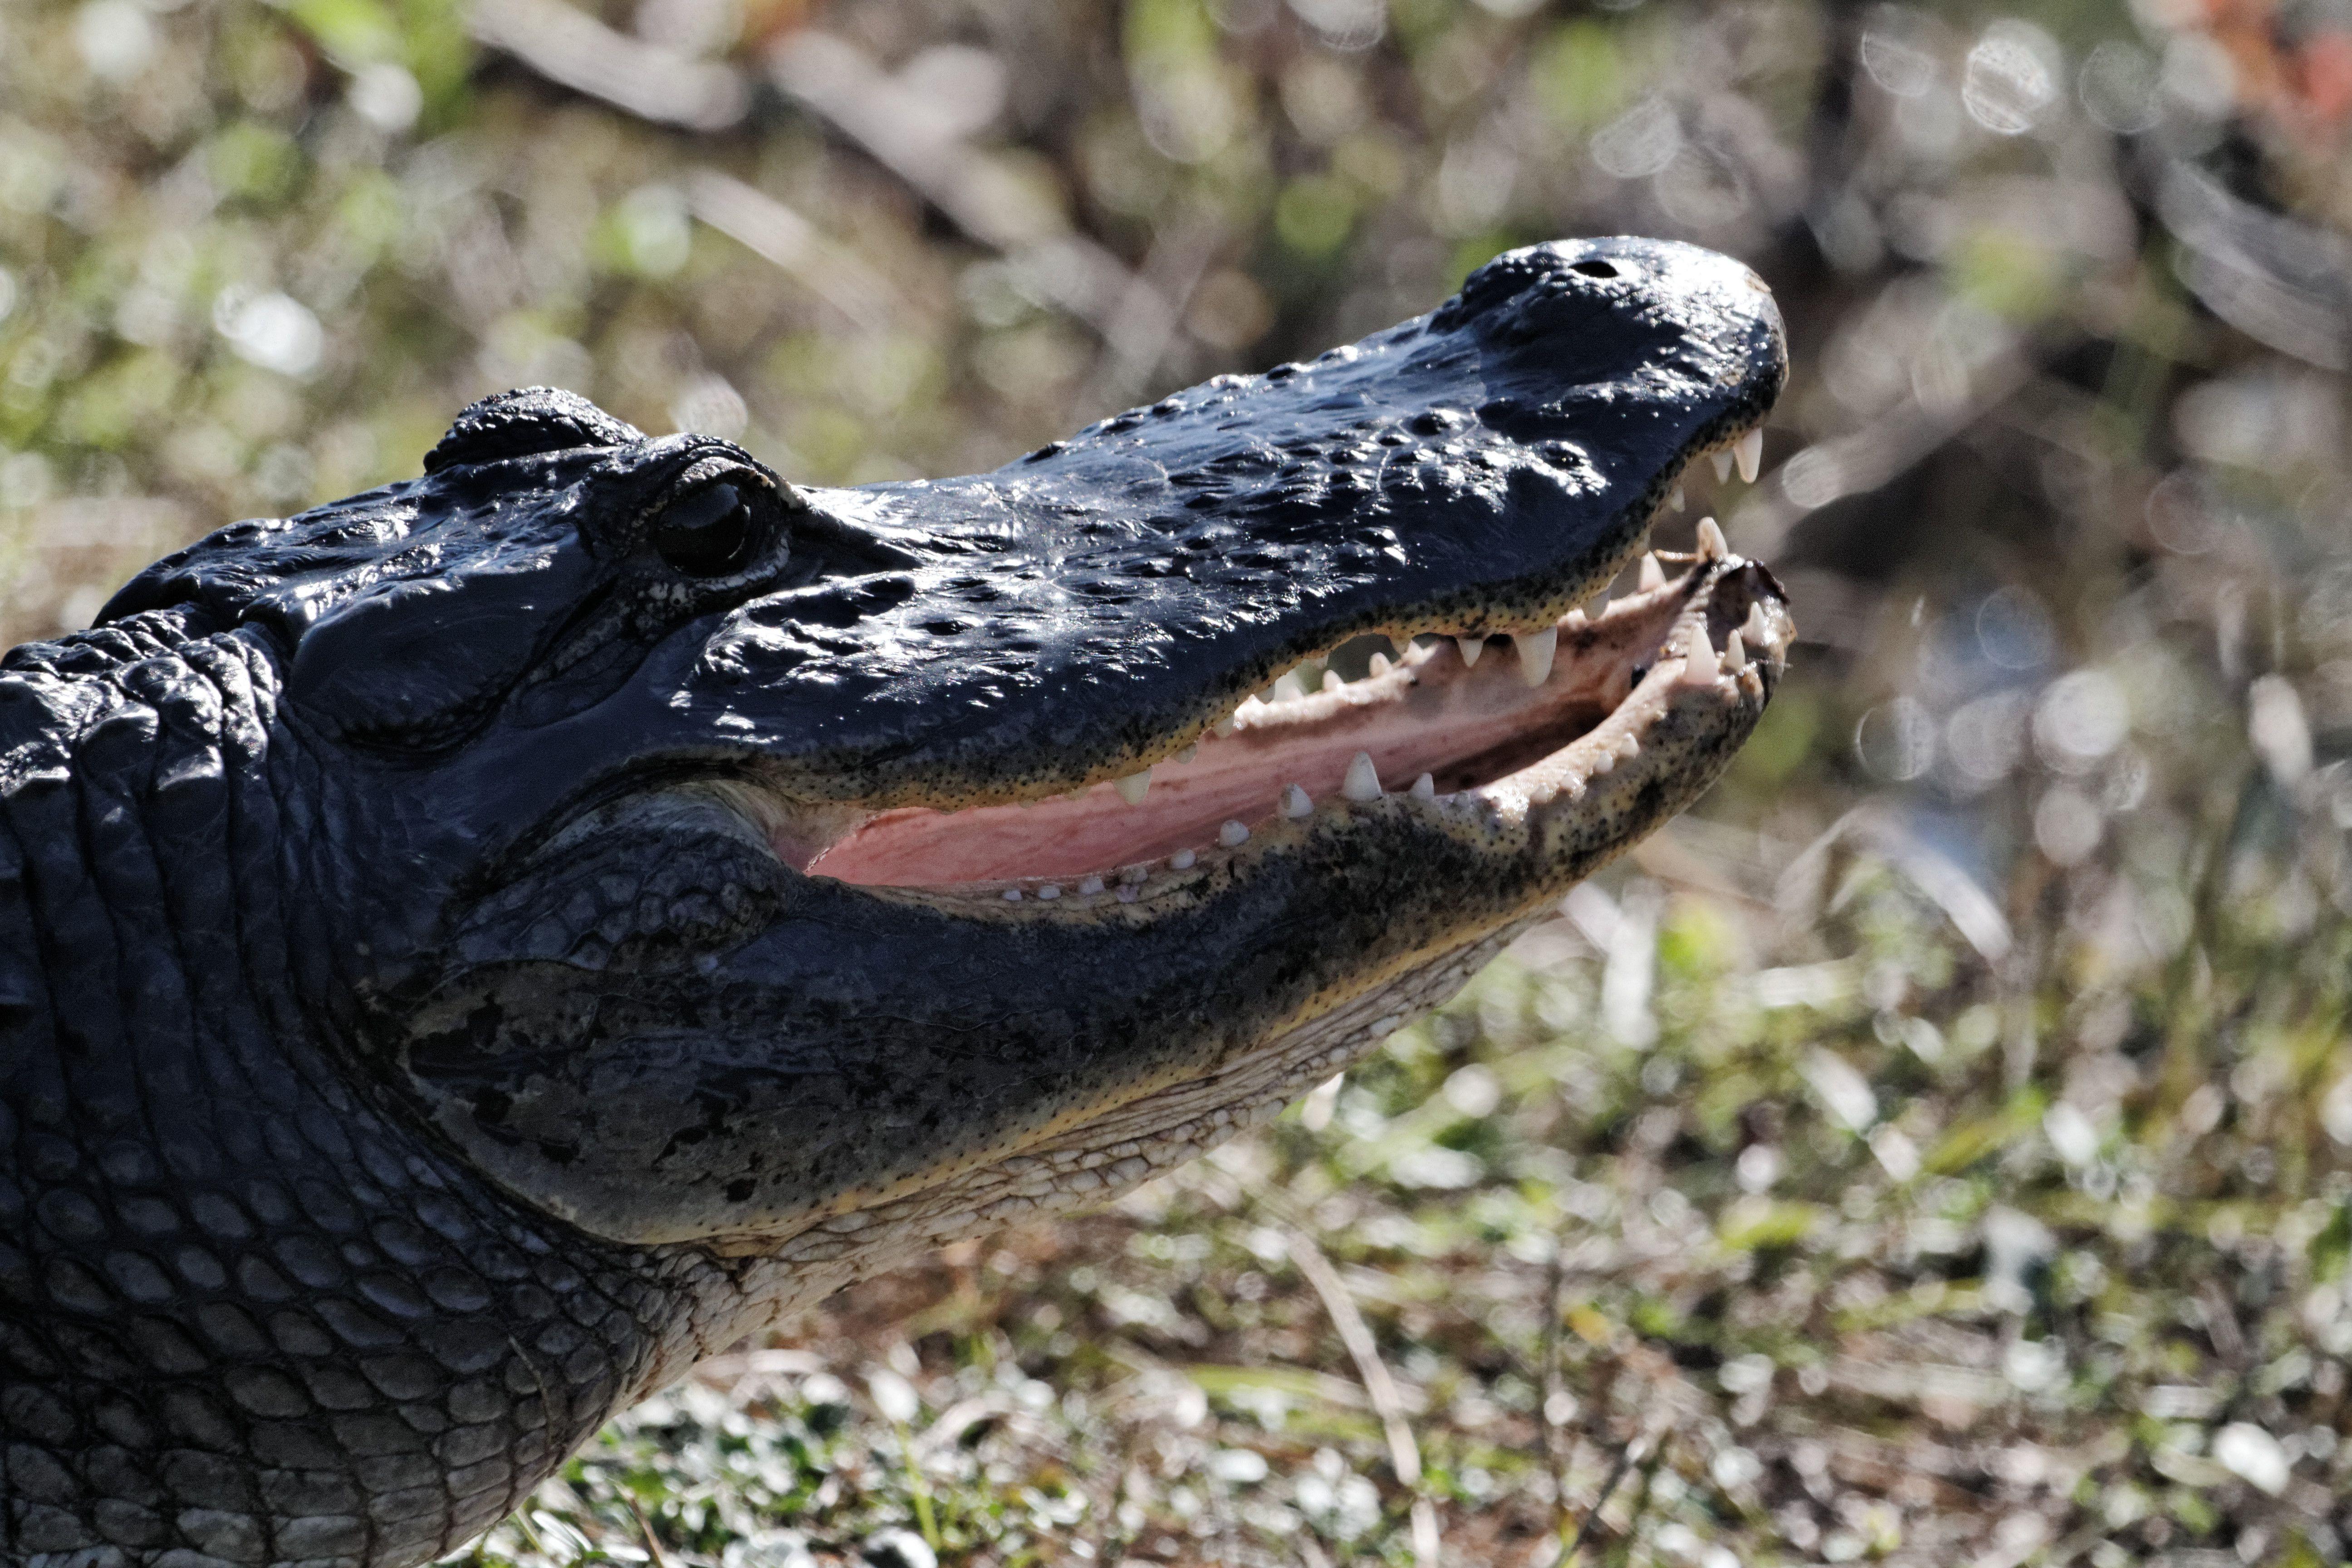 Smiling Alligator Logo - File:Smiling Alligator (6743074203).jpg - Wikimedia Commons